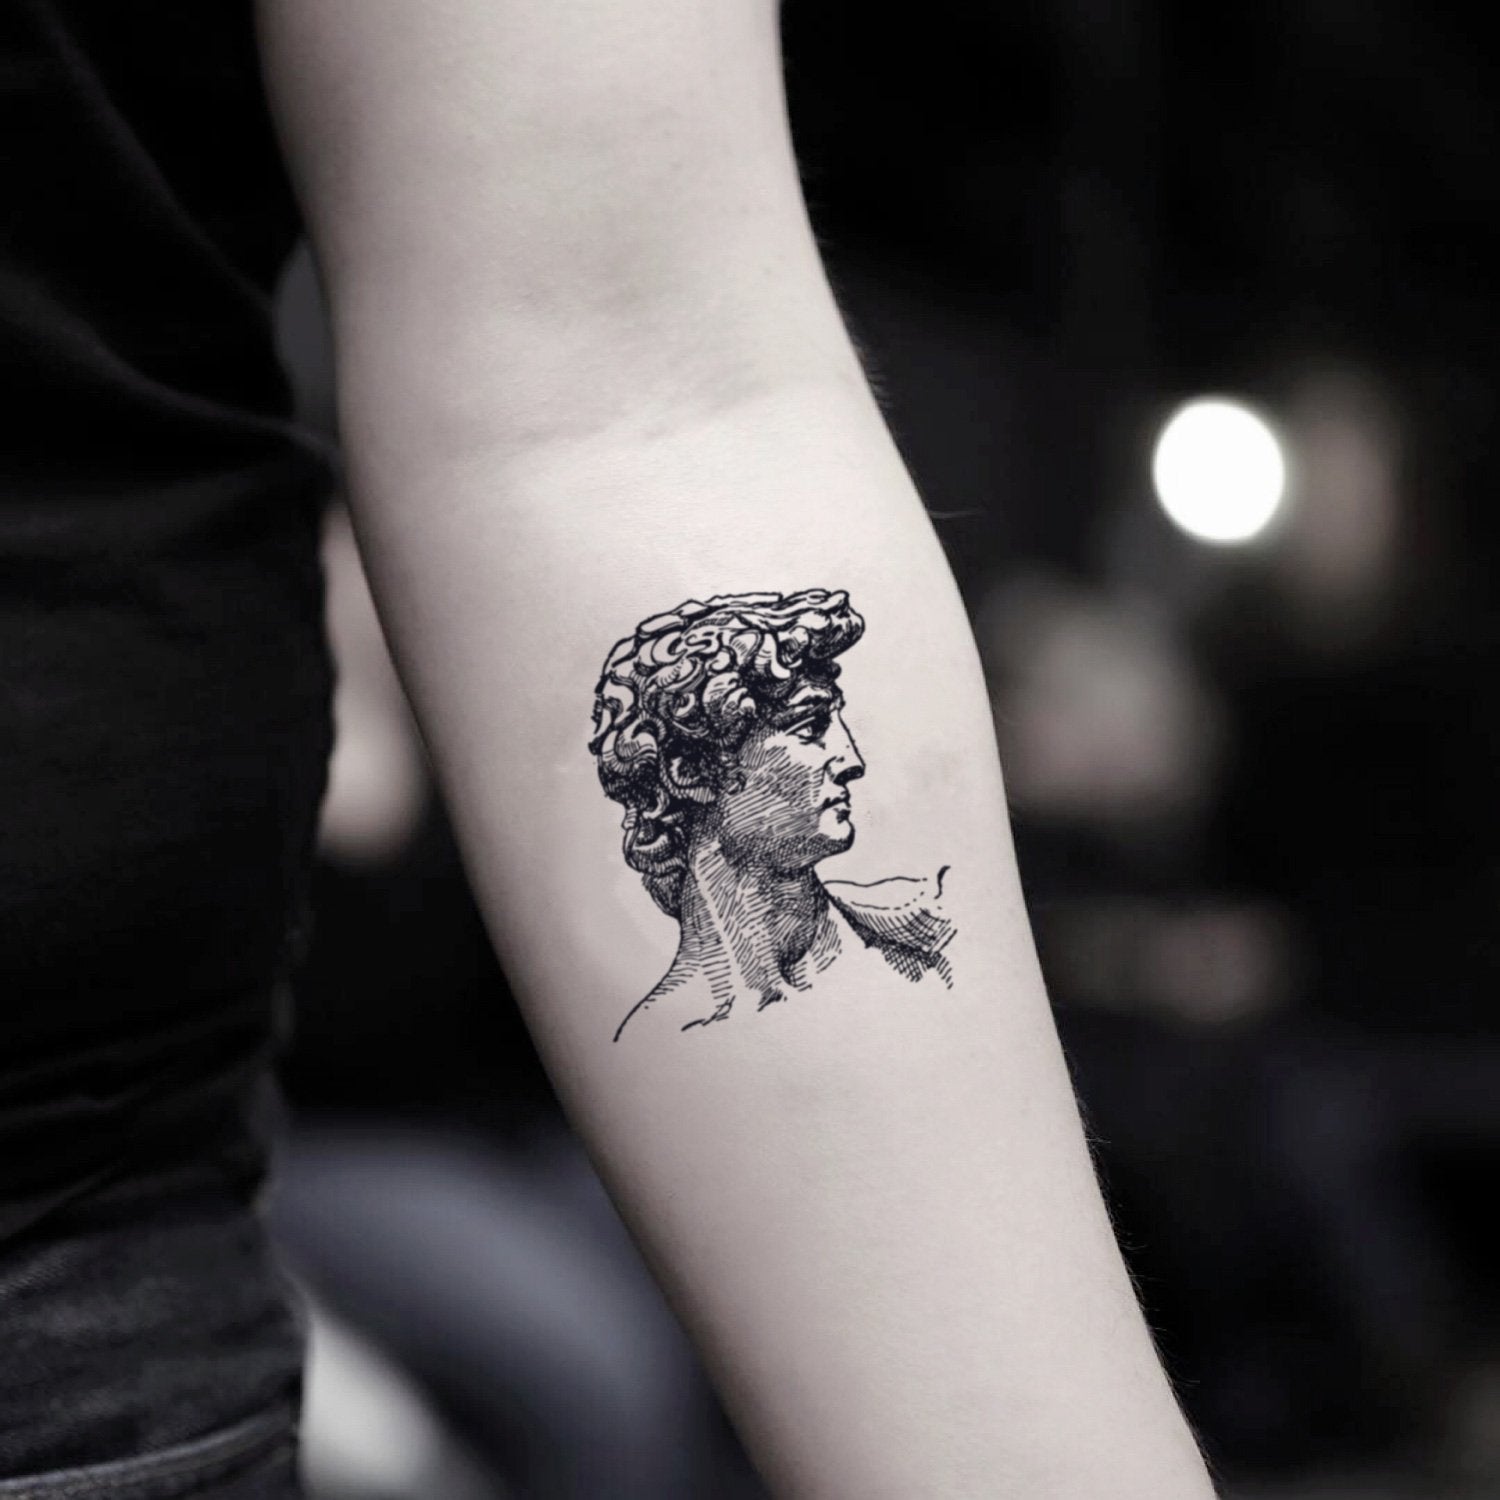 fake small david portrait greek greece statue michael angelo sculpture renaissance temporary tattoo sticker design idea on inner arm